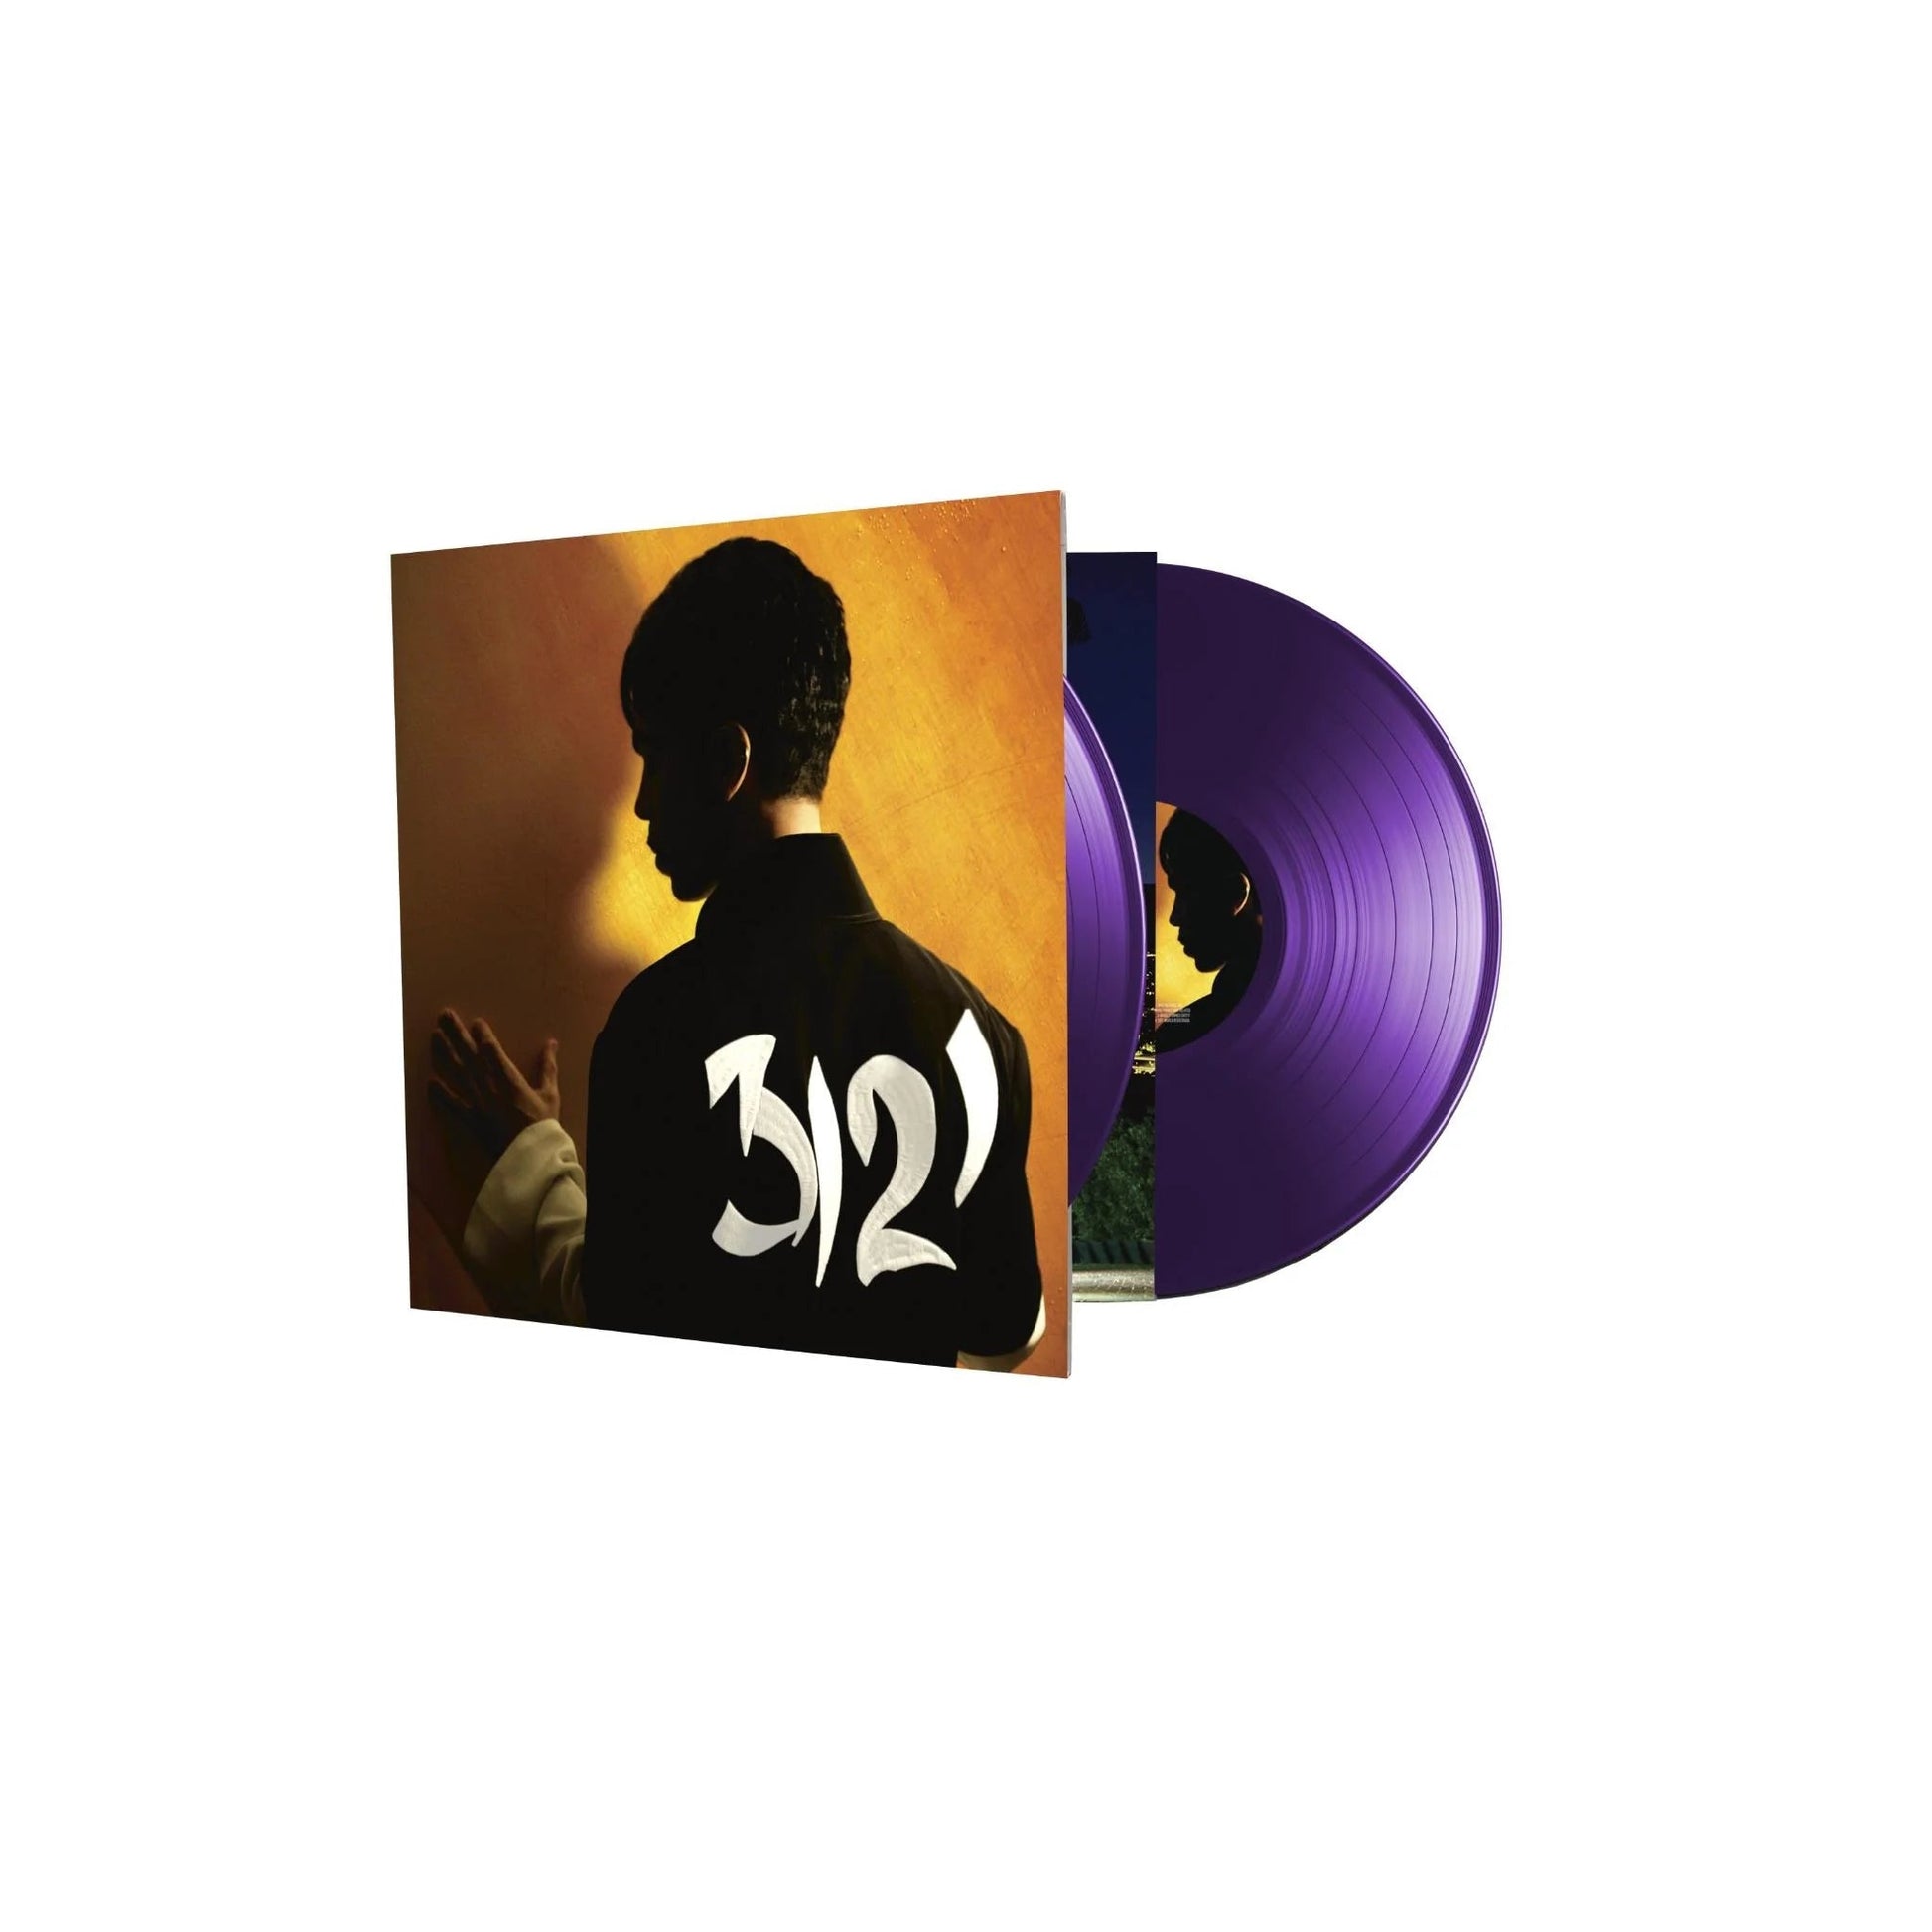 Prince - 3121 - Purple Vinyl - BeatRelease